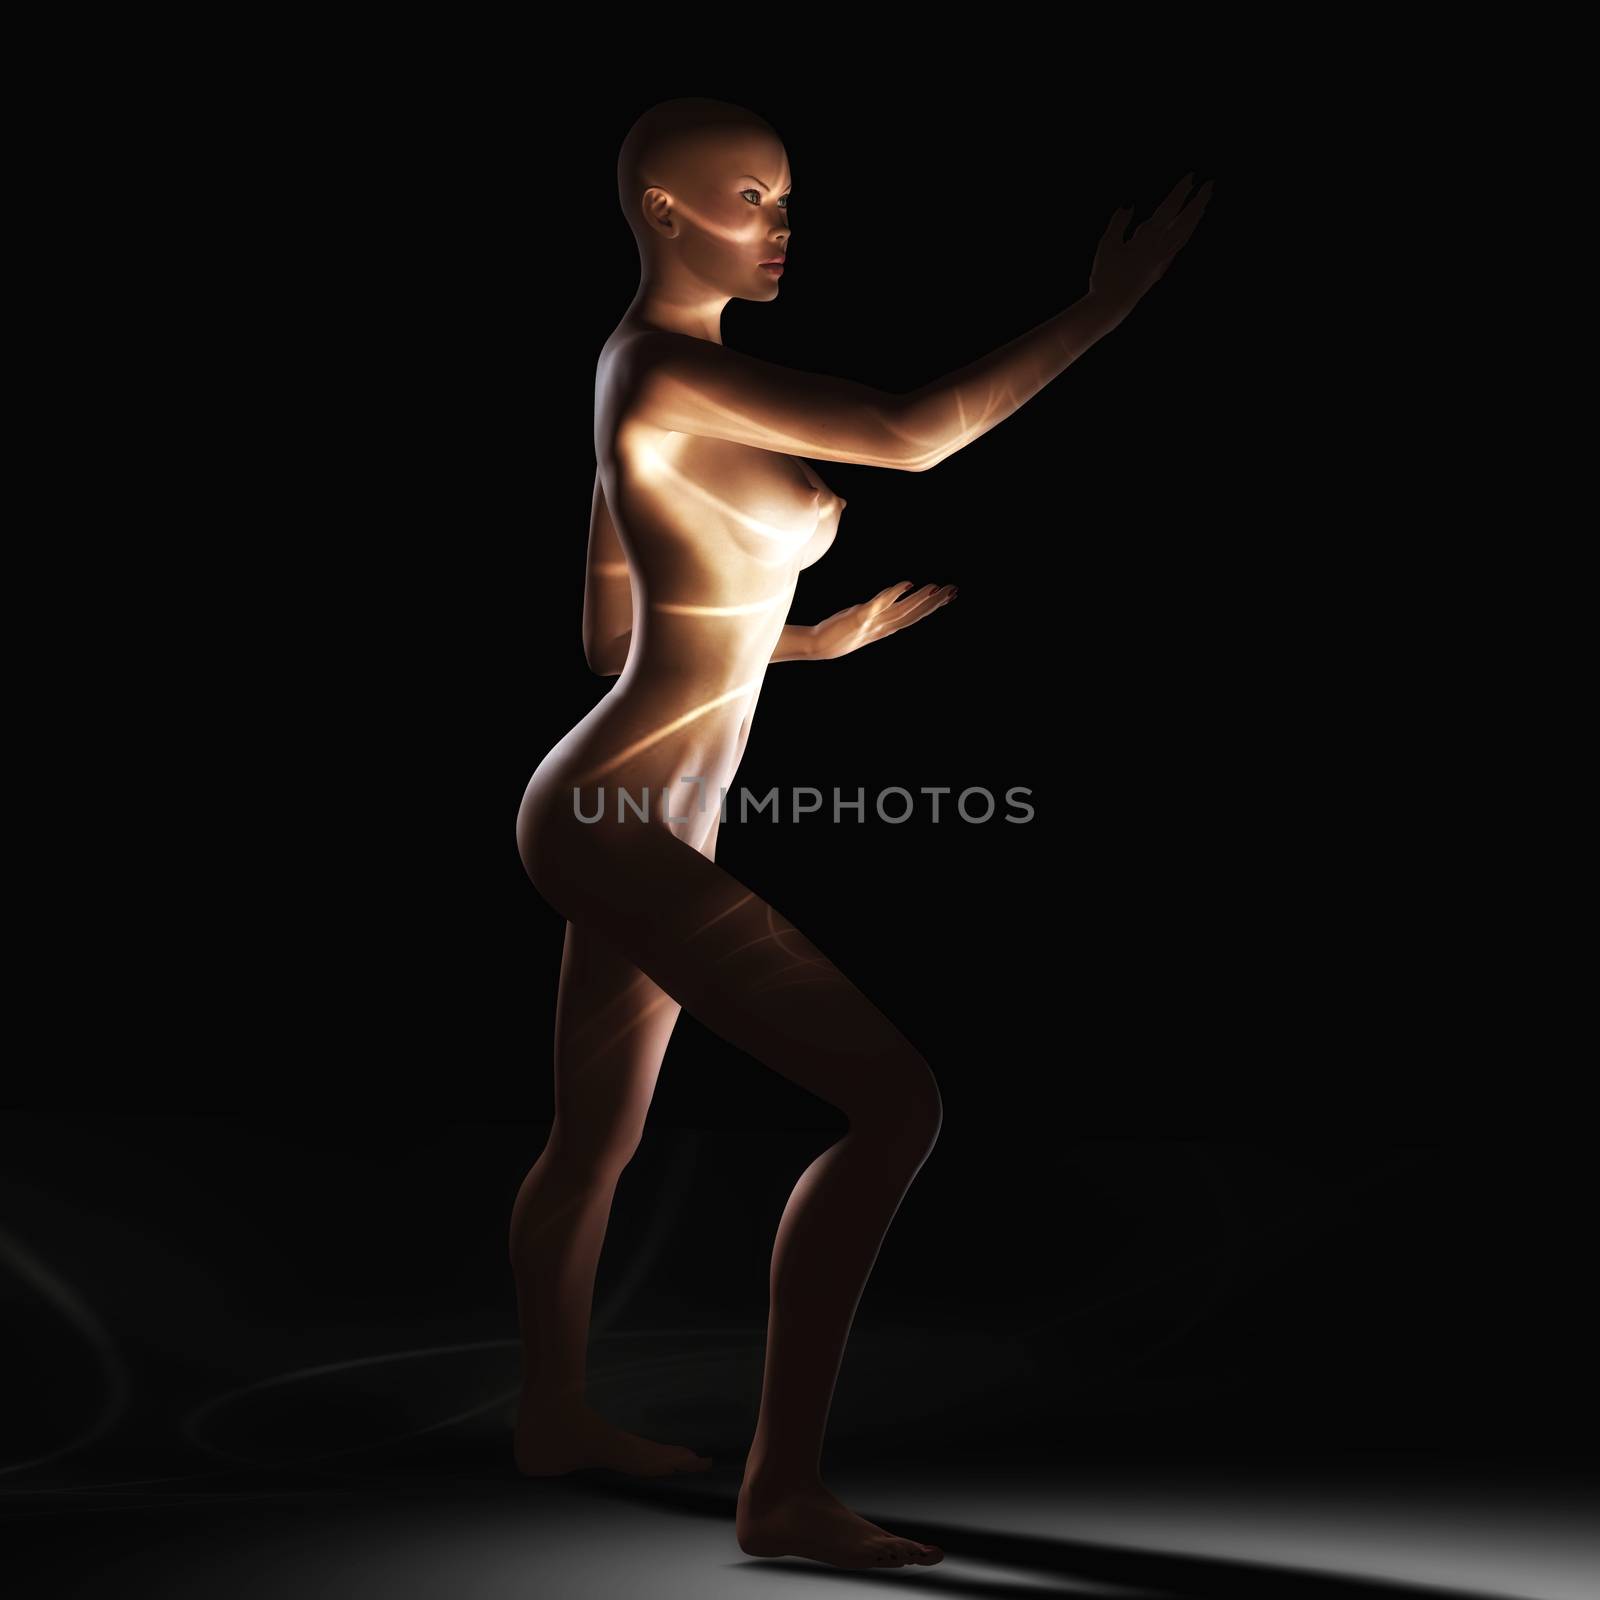 Digital Illustration of a Female